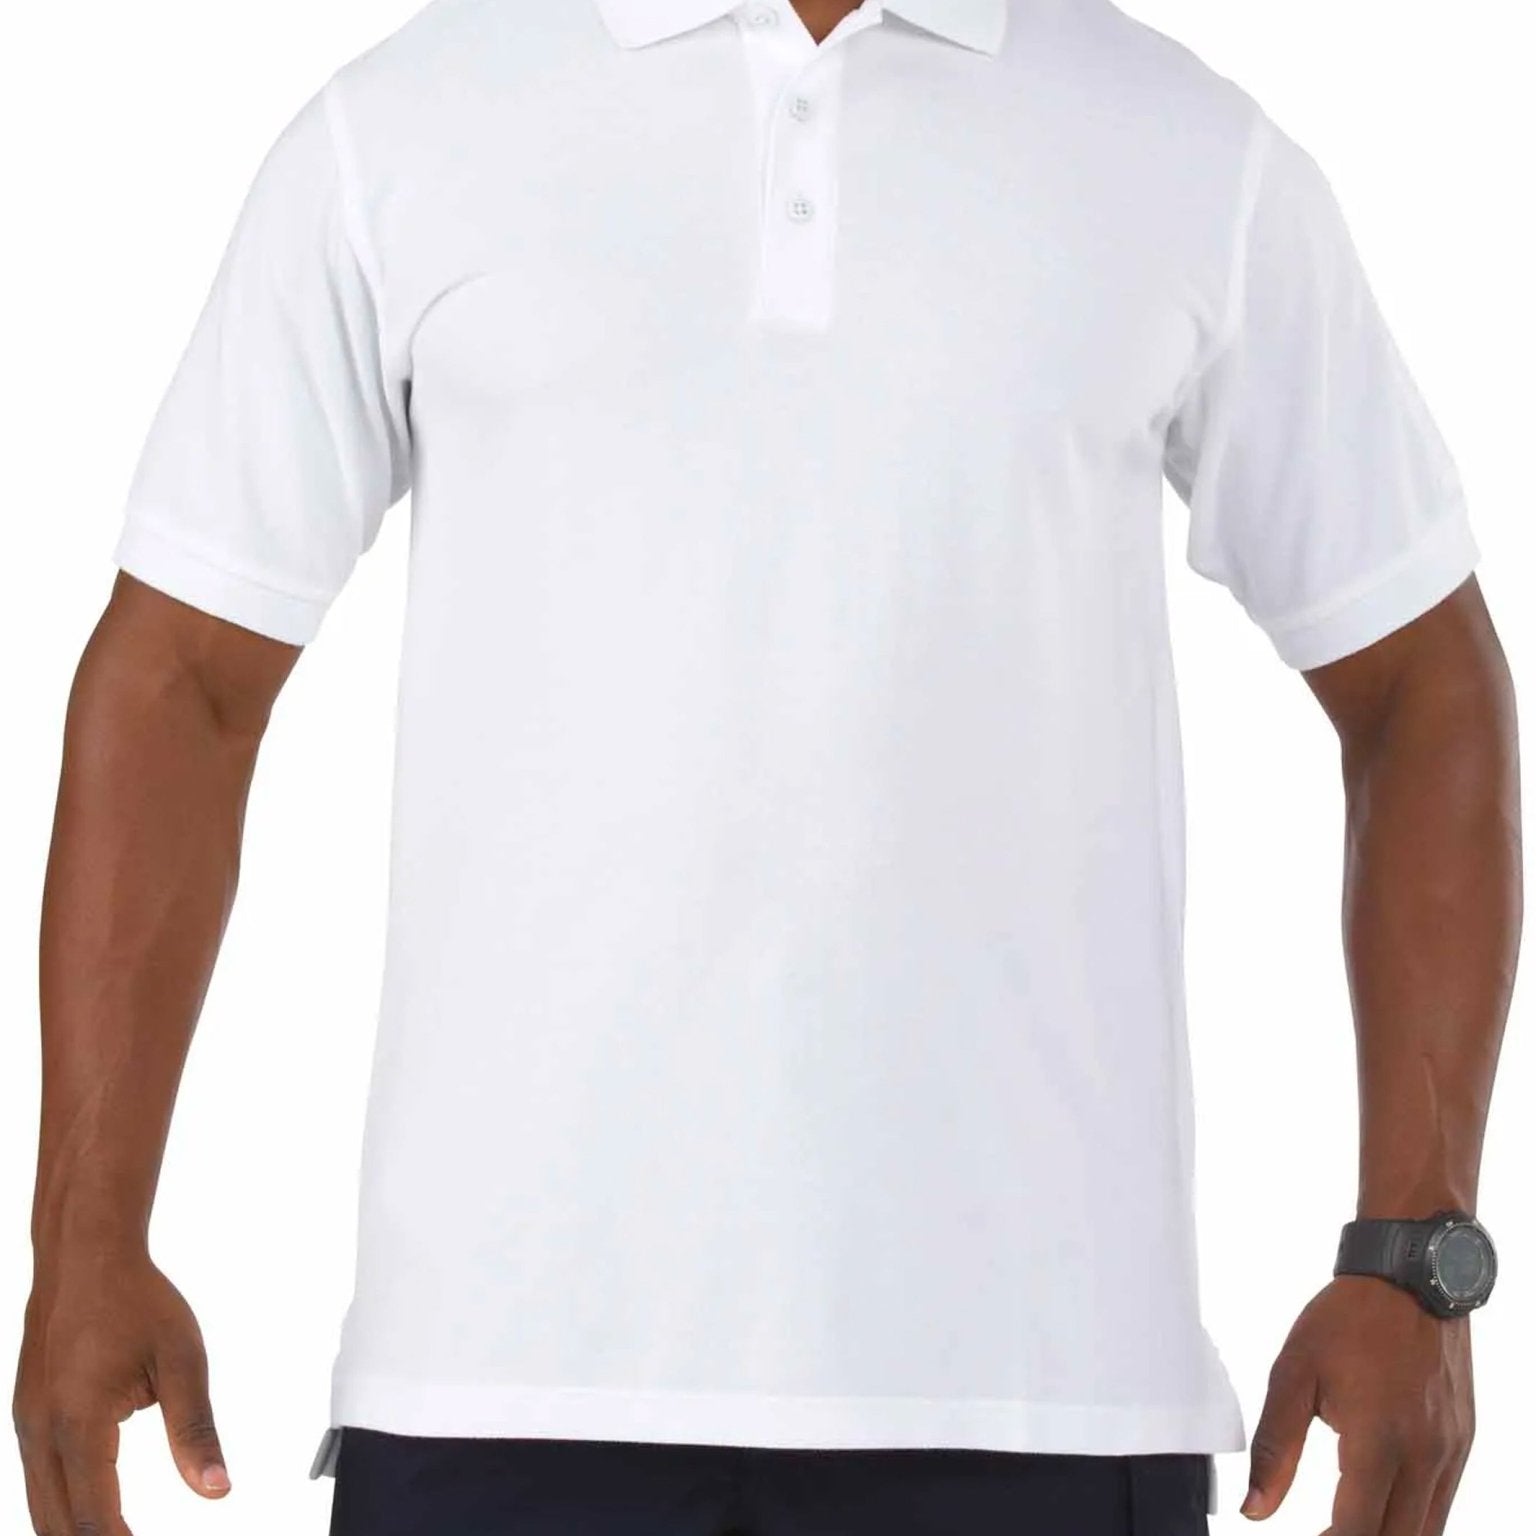 4elementsclothing5.11 Tactical5.11 Tactical - 5.11 Professional Short Sleeve Polo Shirt - 100% Cotton PiqueT-Shirt41060-010-XS